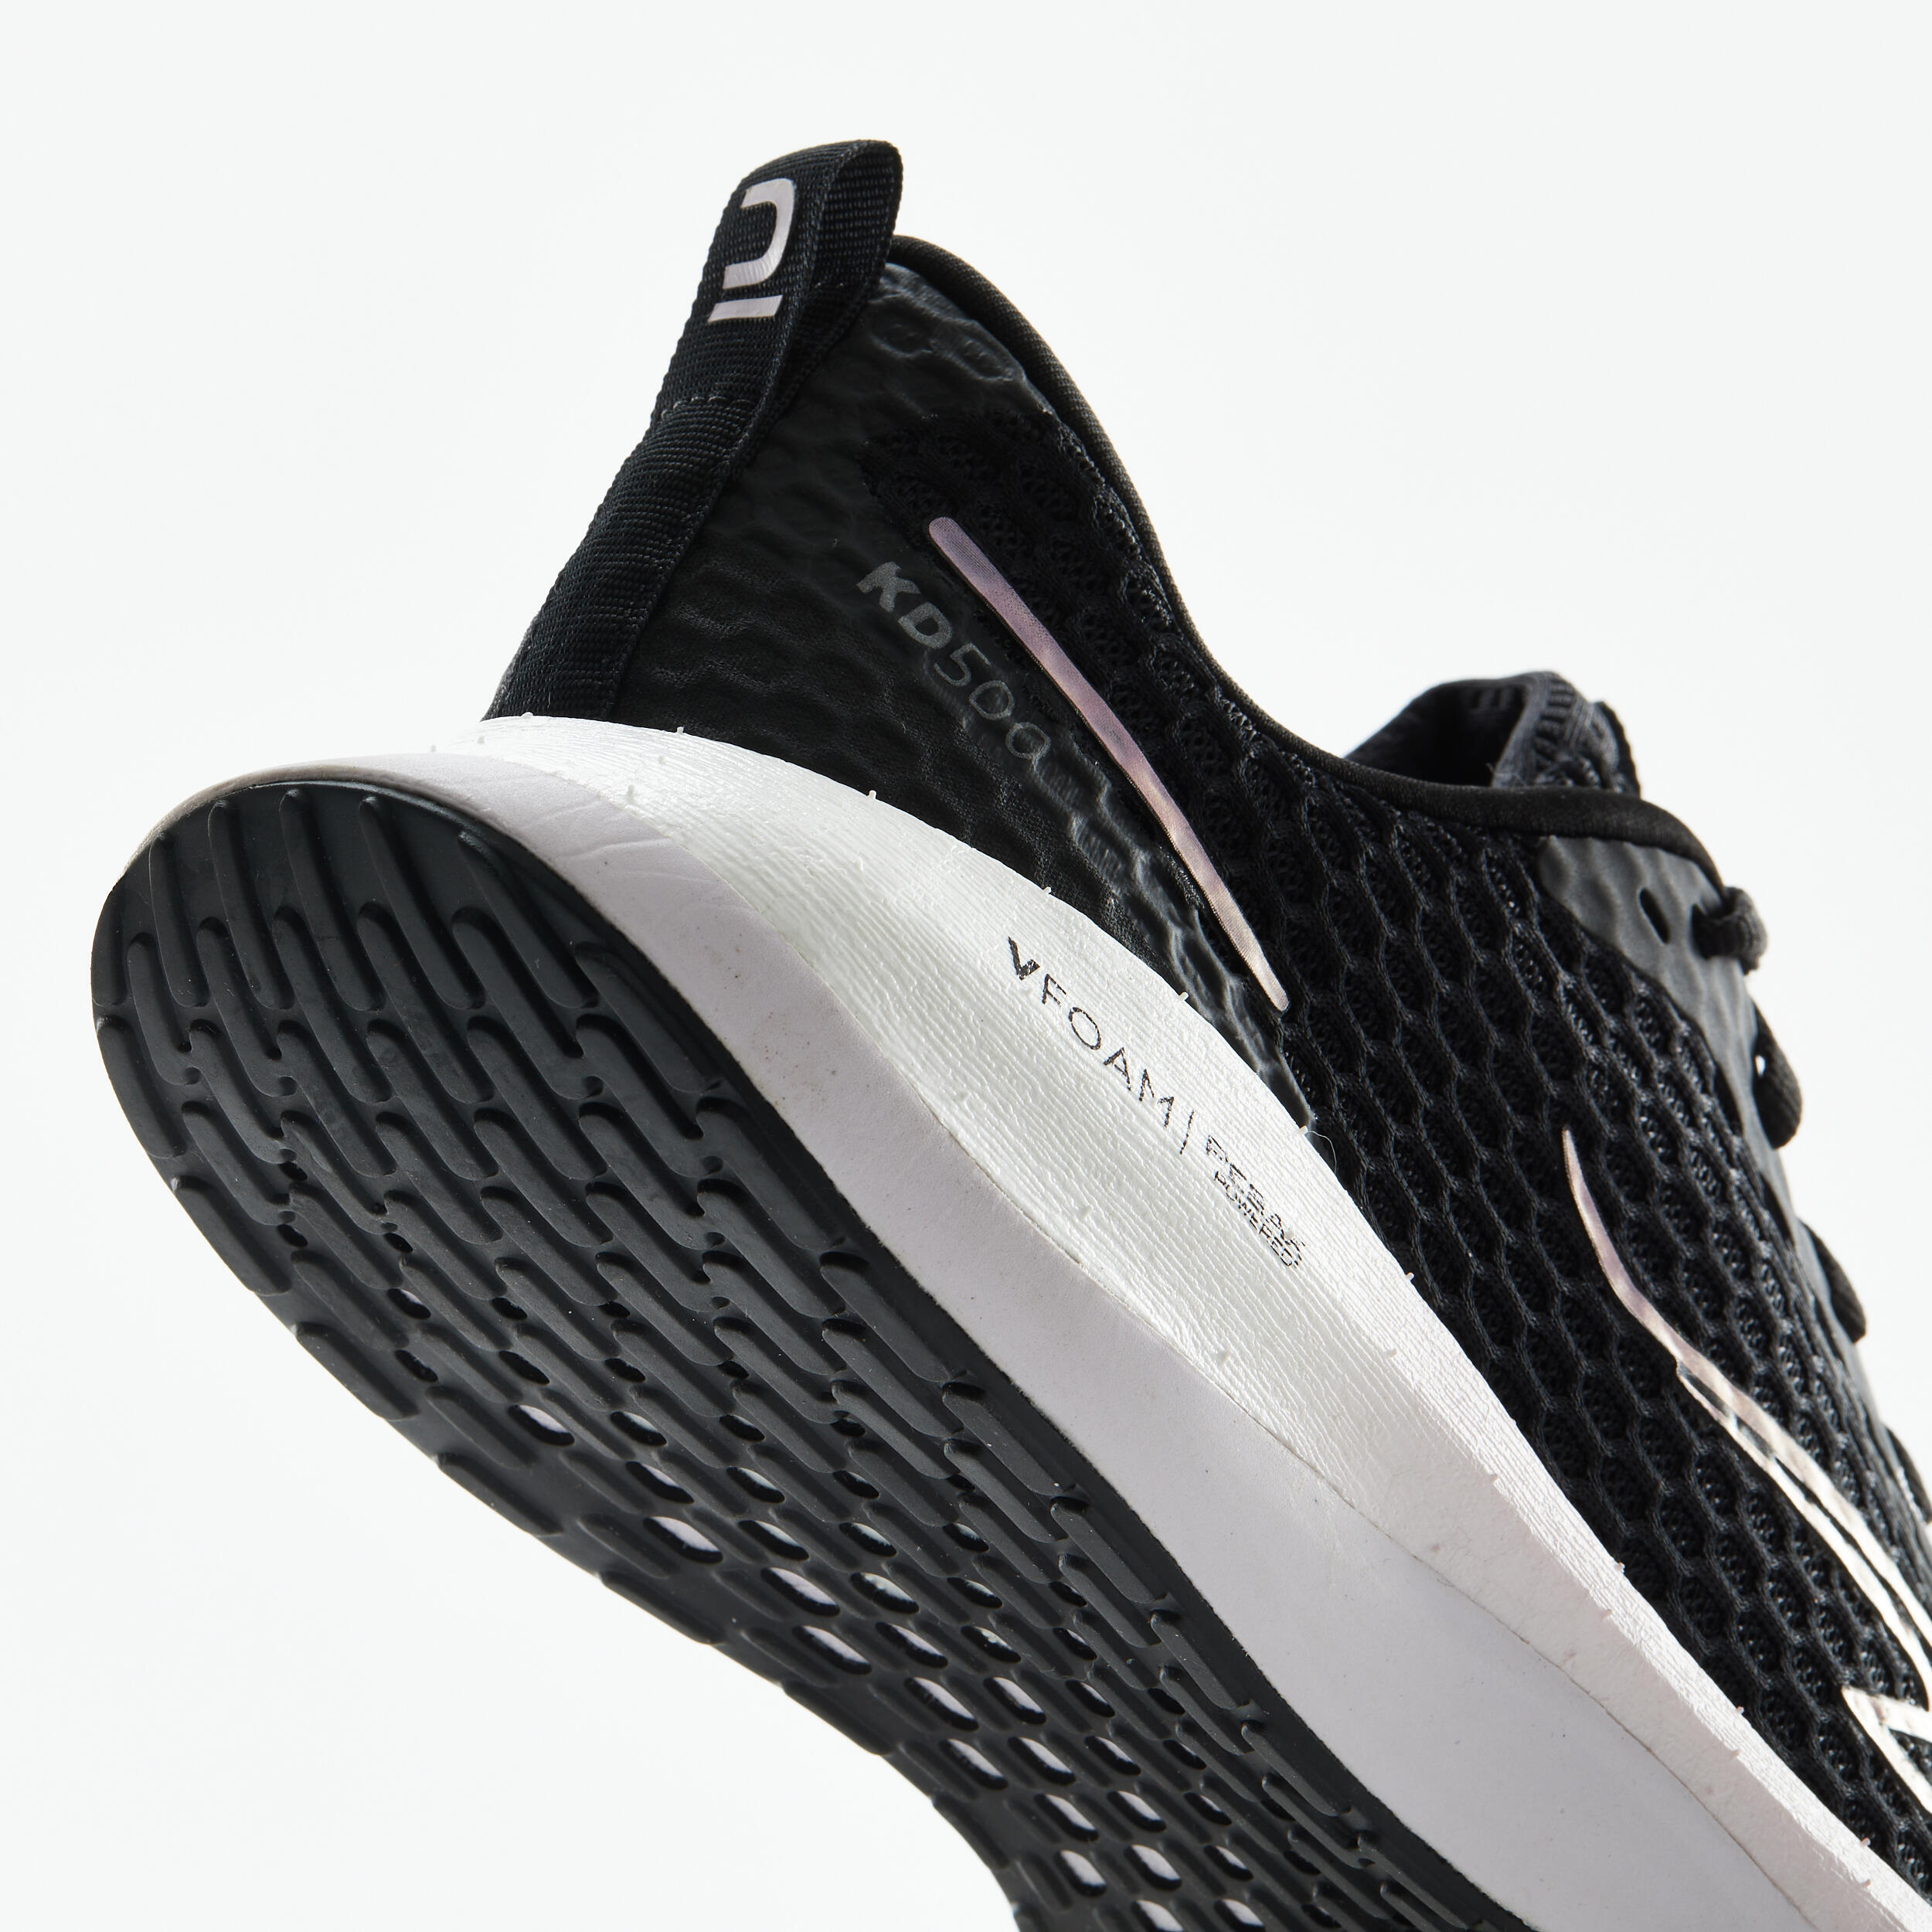 KIPRUN KD500 2 women's running shoes - black/mauve 4/8